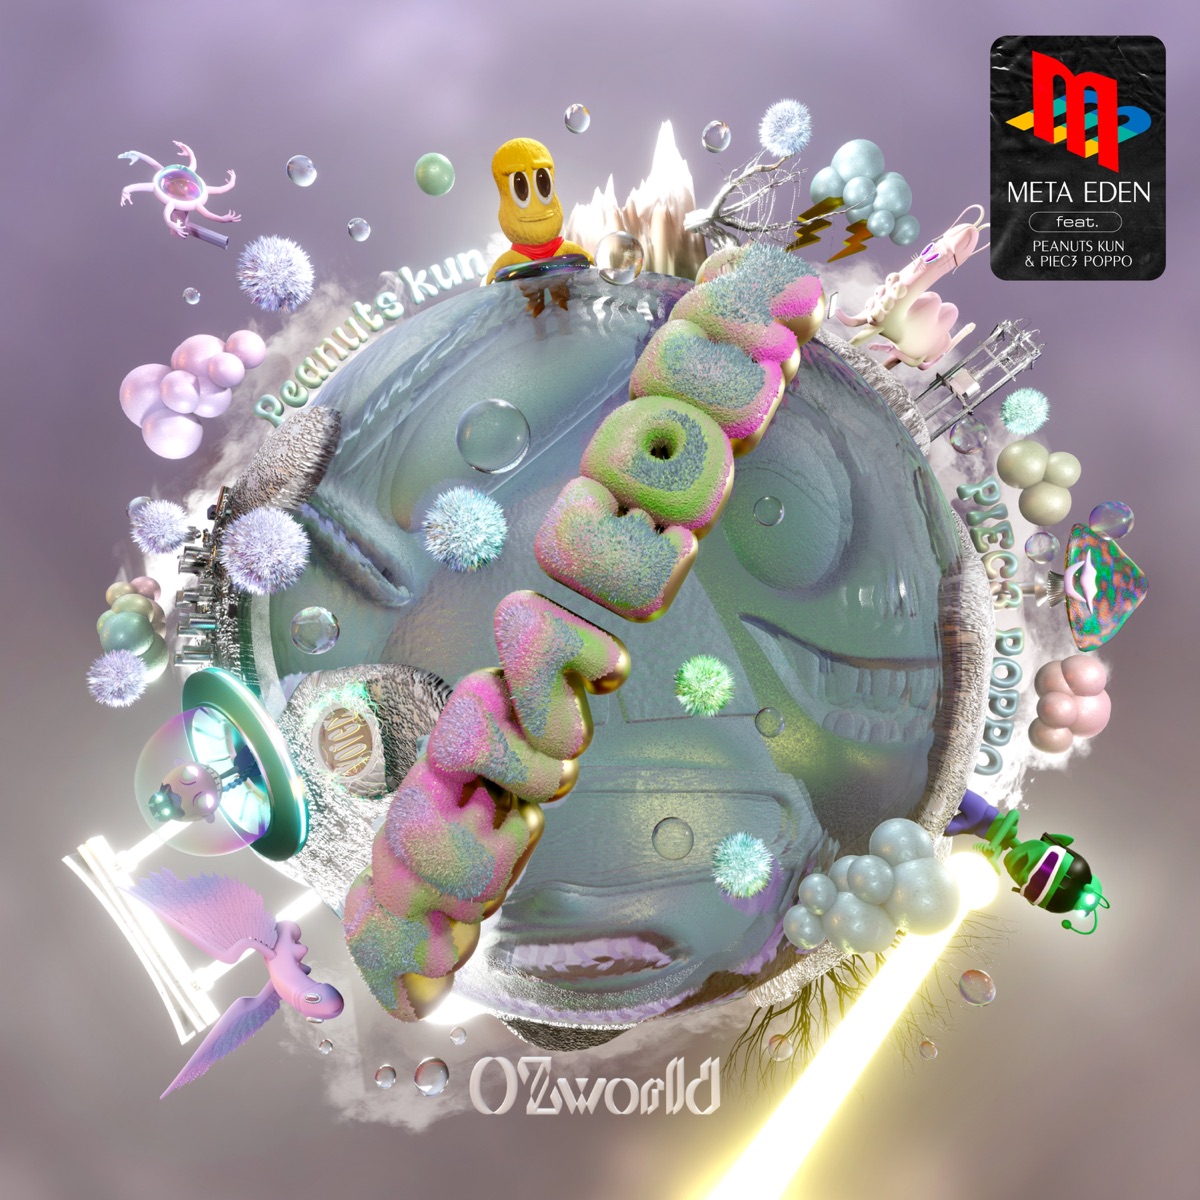 『OZworld - META EDEN (feat. ピーナッツくん & PIEC3 POPPO)』収録の『META EDEN (feat. ピーナッツくん & PIEC3 POPPO)』ジャケット